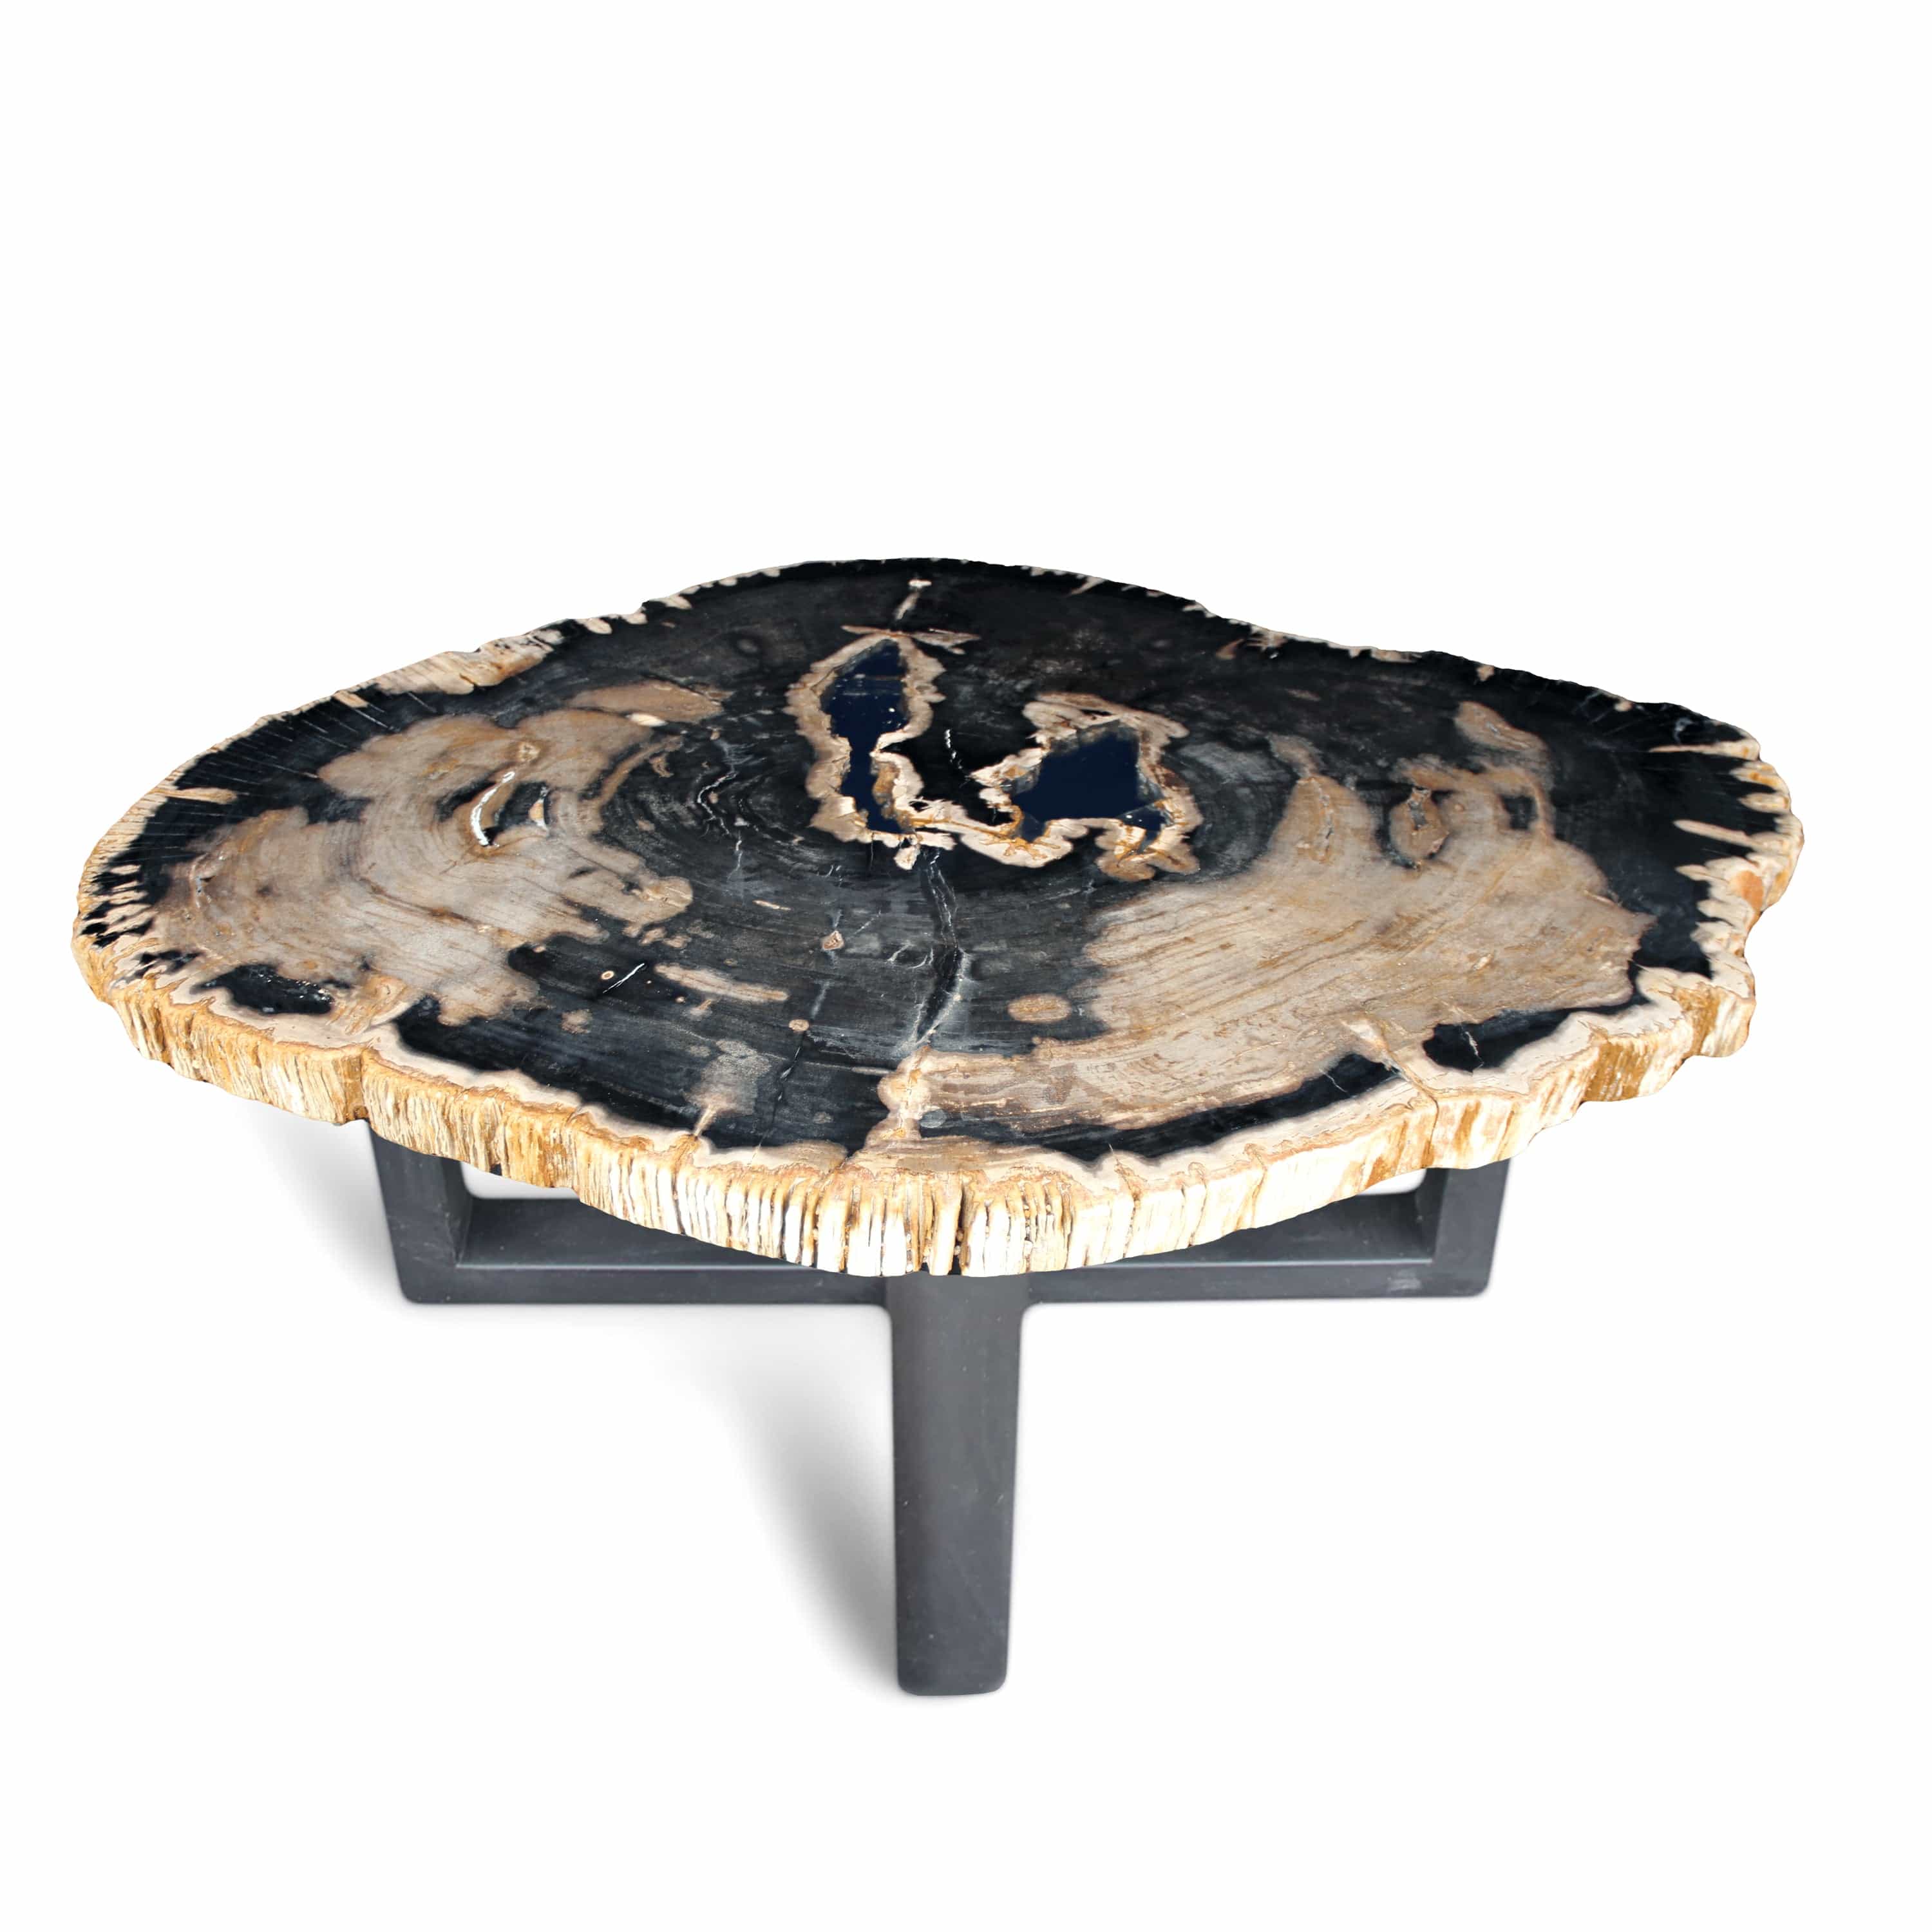 Kalifano Petrified Wood Polished Petrified Wood Coffee Table from Indonesia - 62" / 353 lbs PWT12800.001